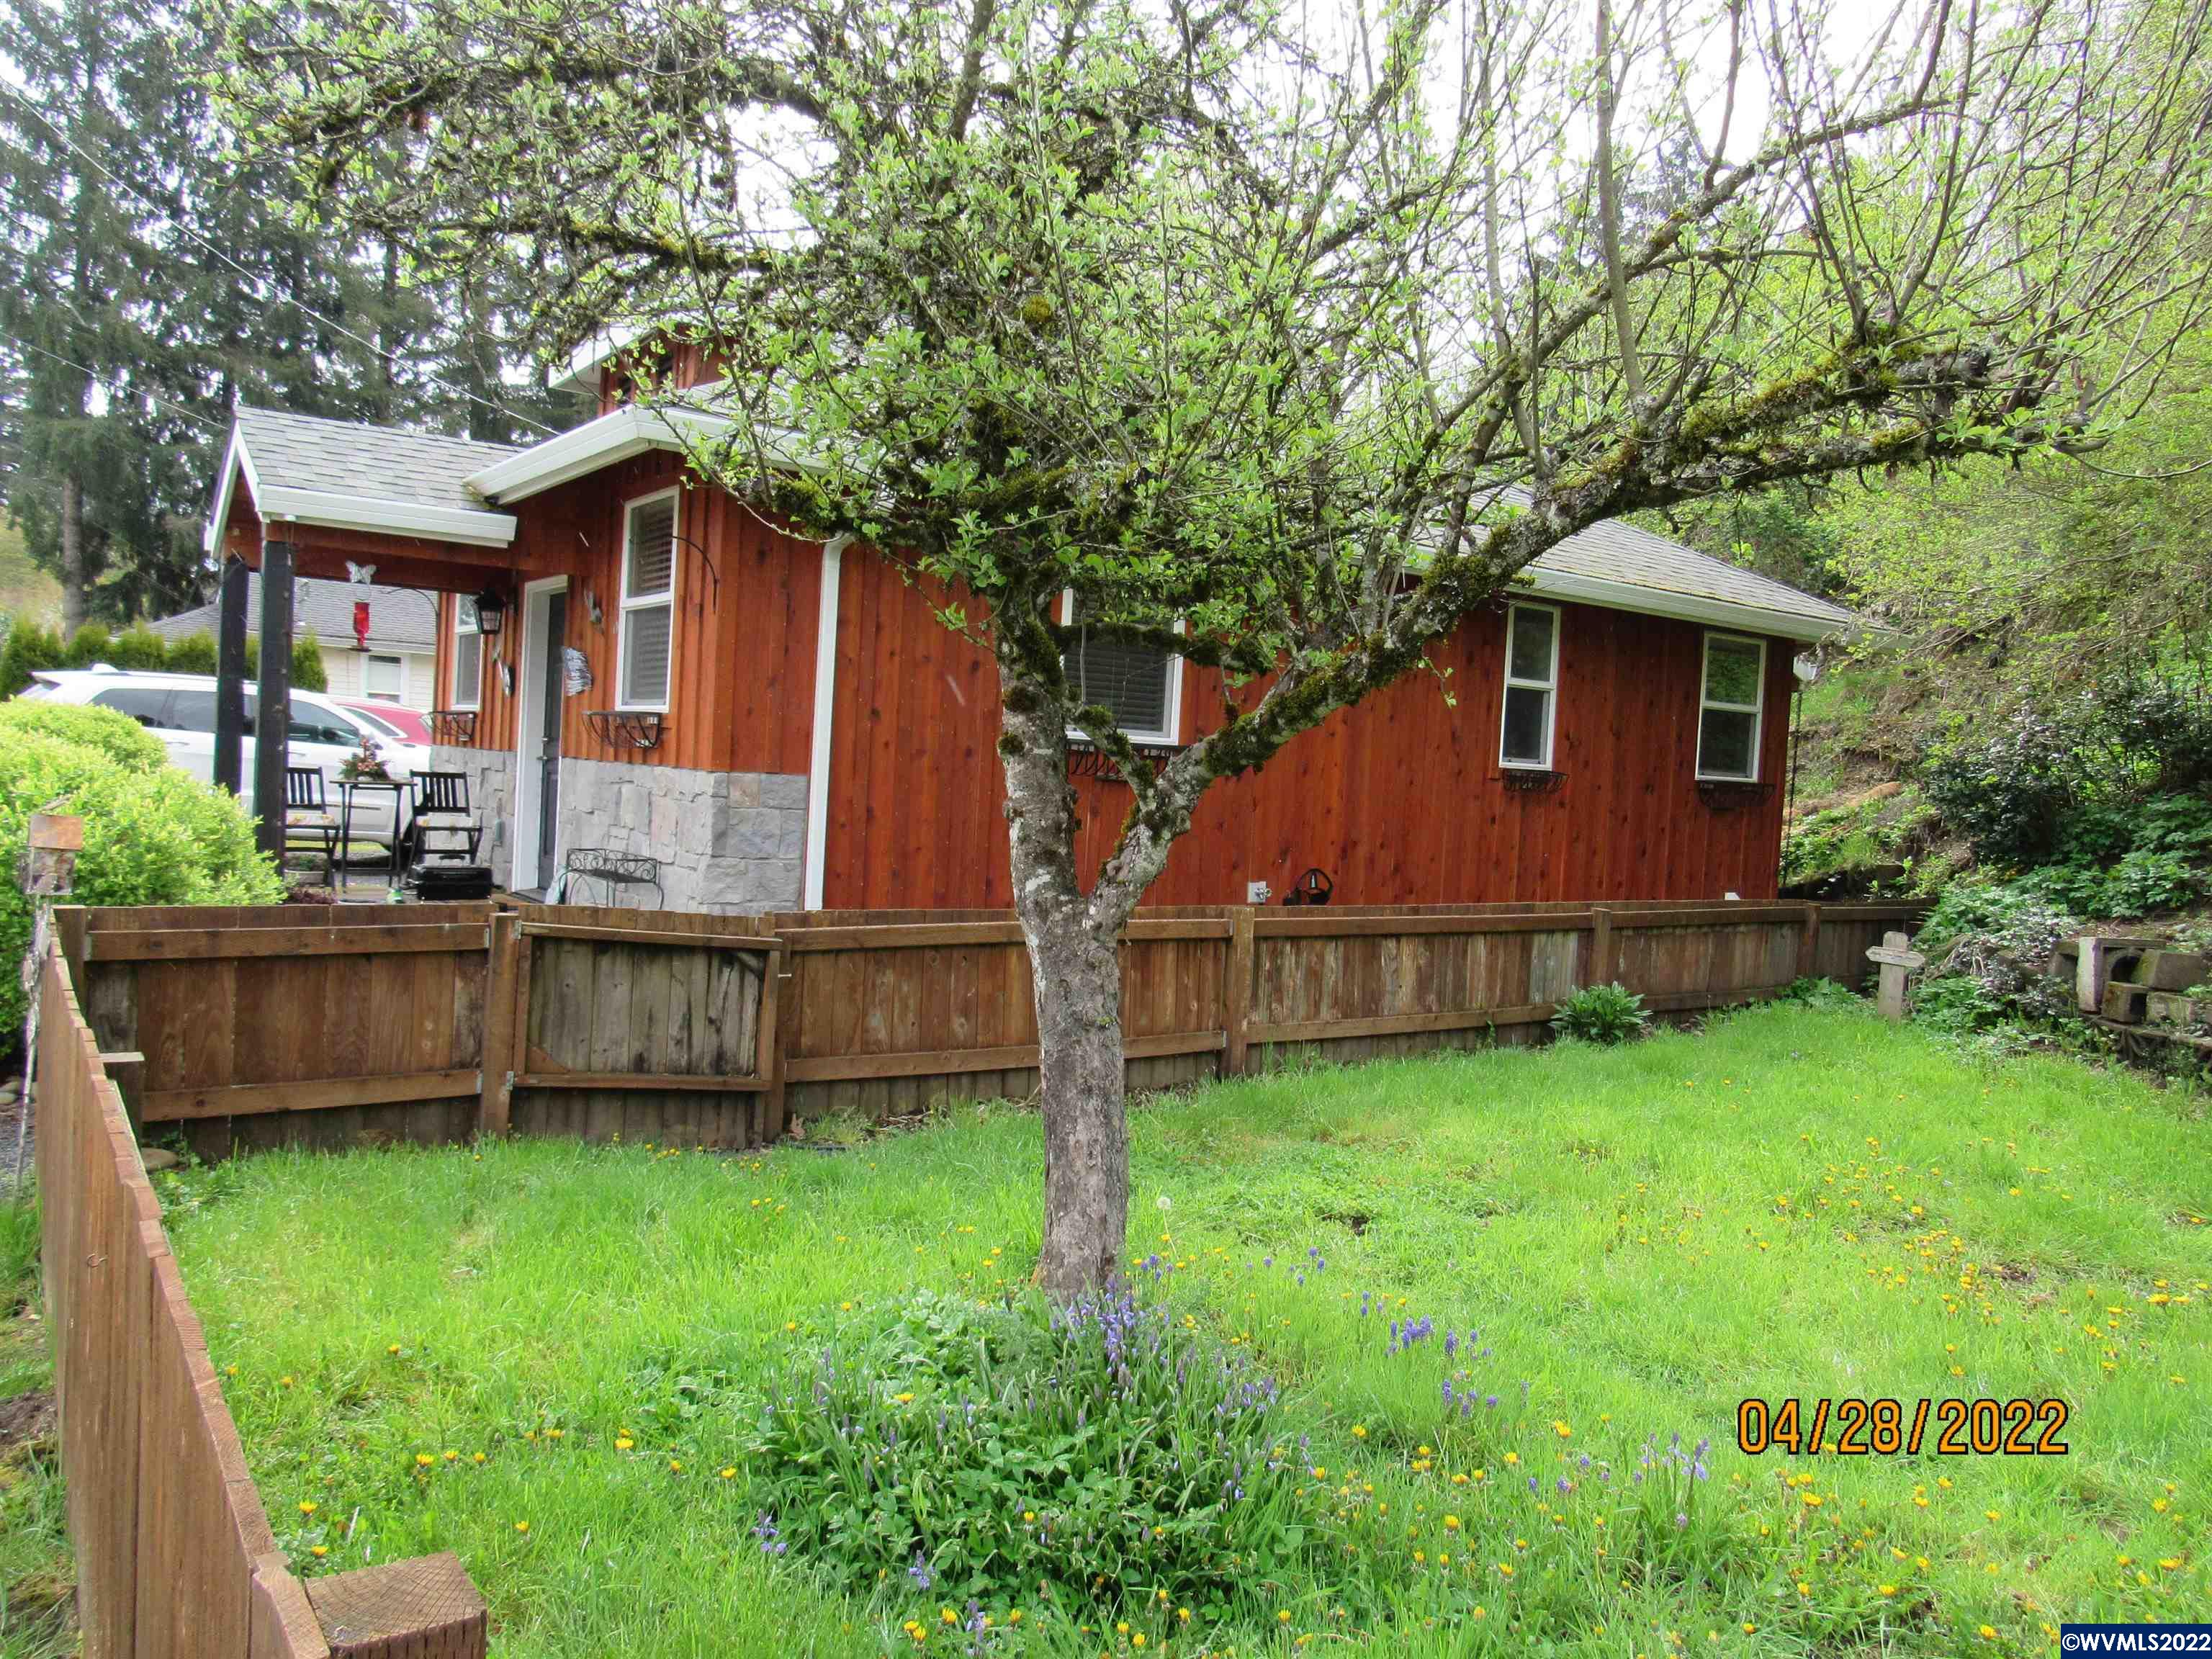 170 SE Hazel St, Mill City, Oregon 97360, 1 Bedroom Bedrooms, ,1 BathroomBathrooms,Residence,For sale,170 SE Hazel St,791875